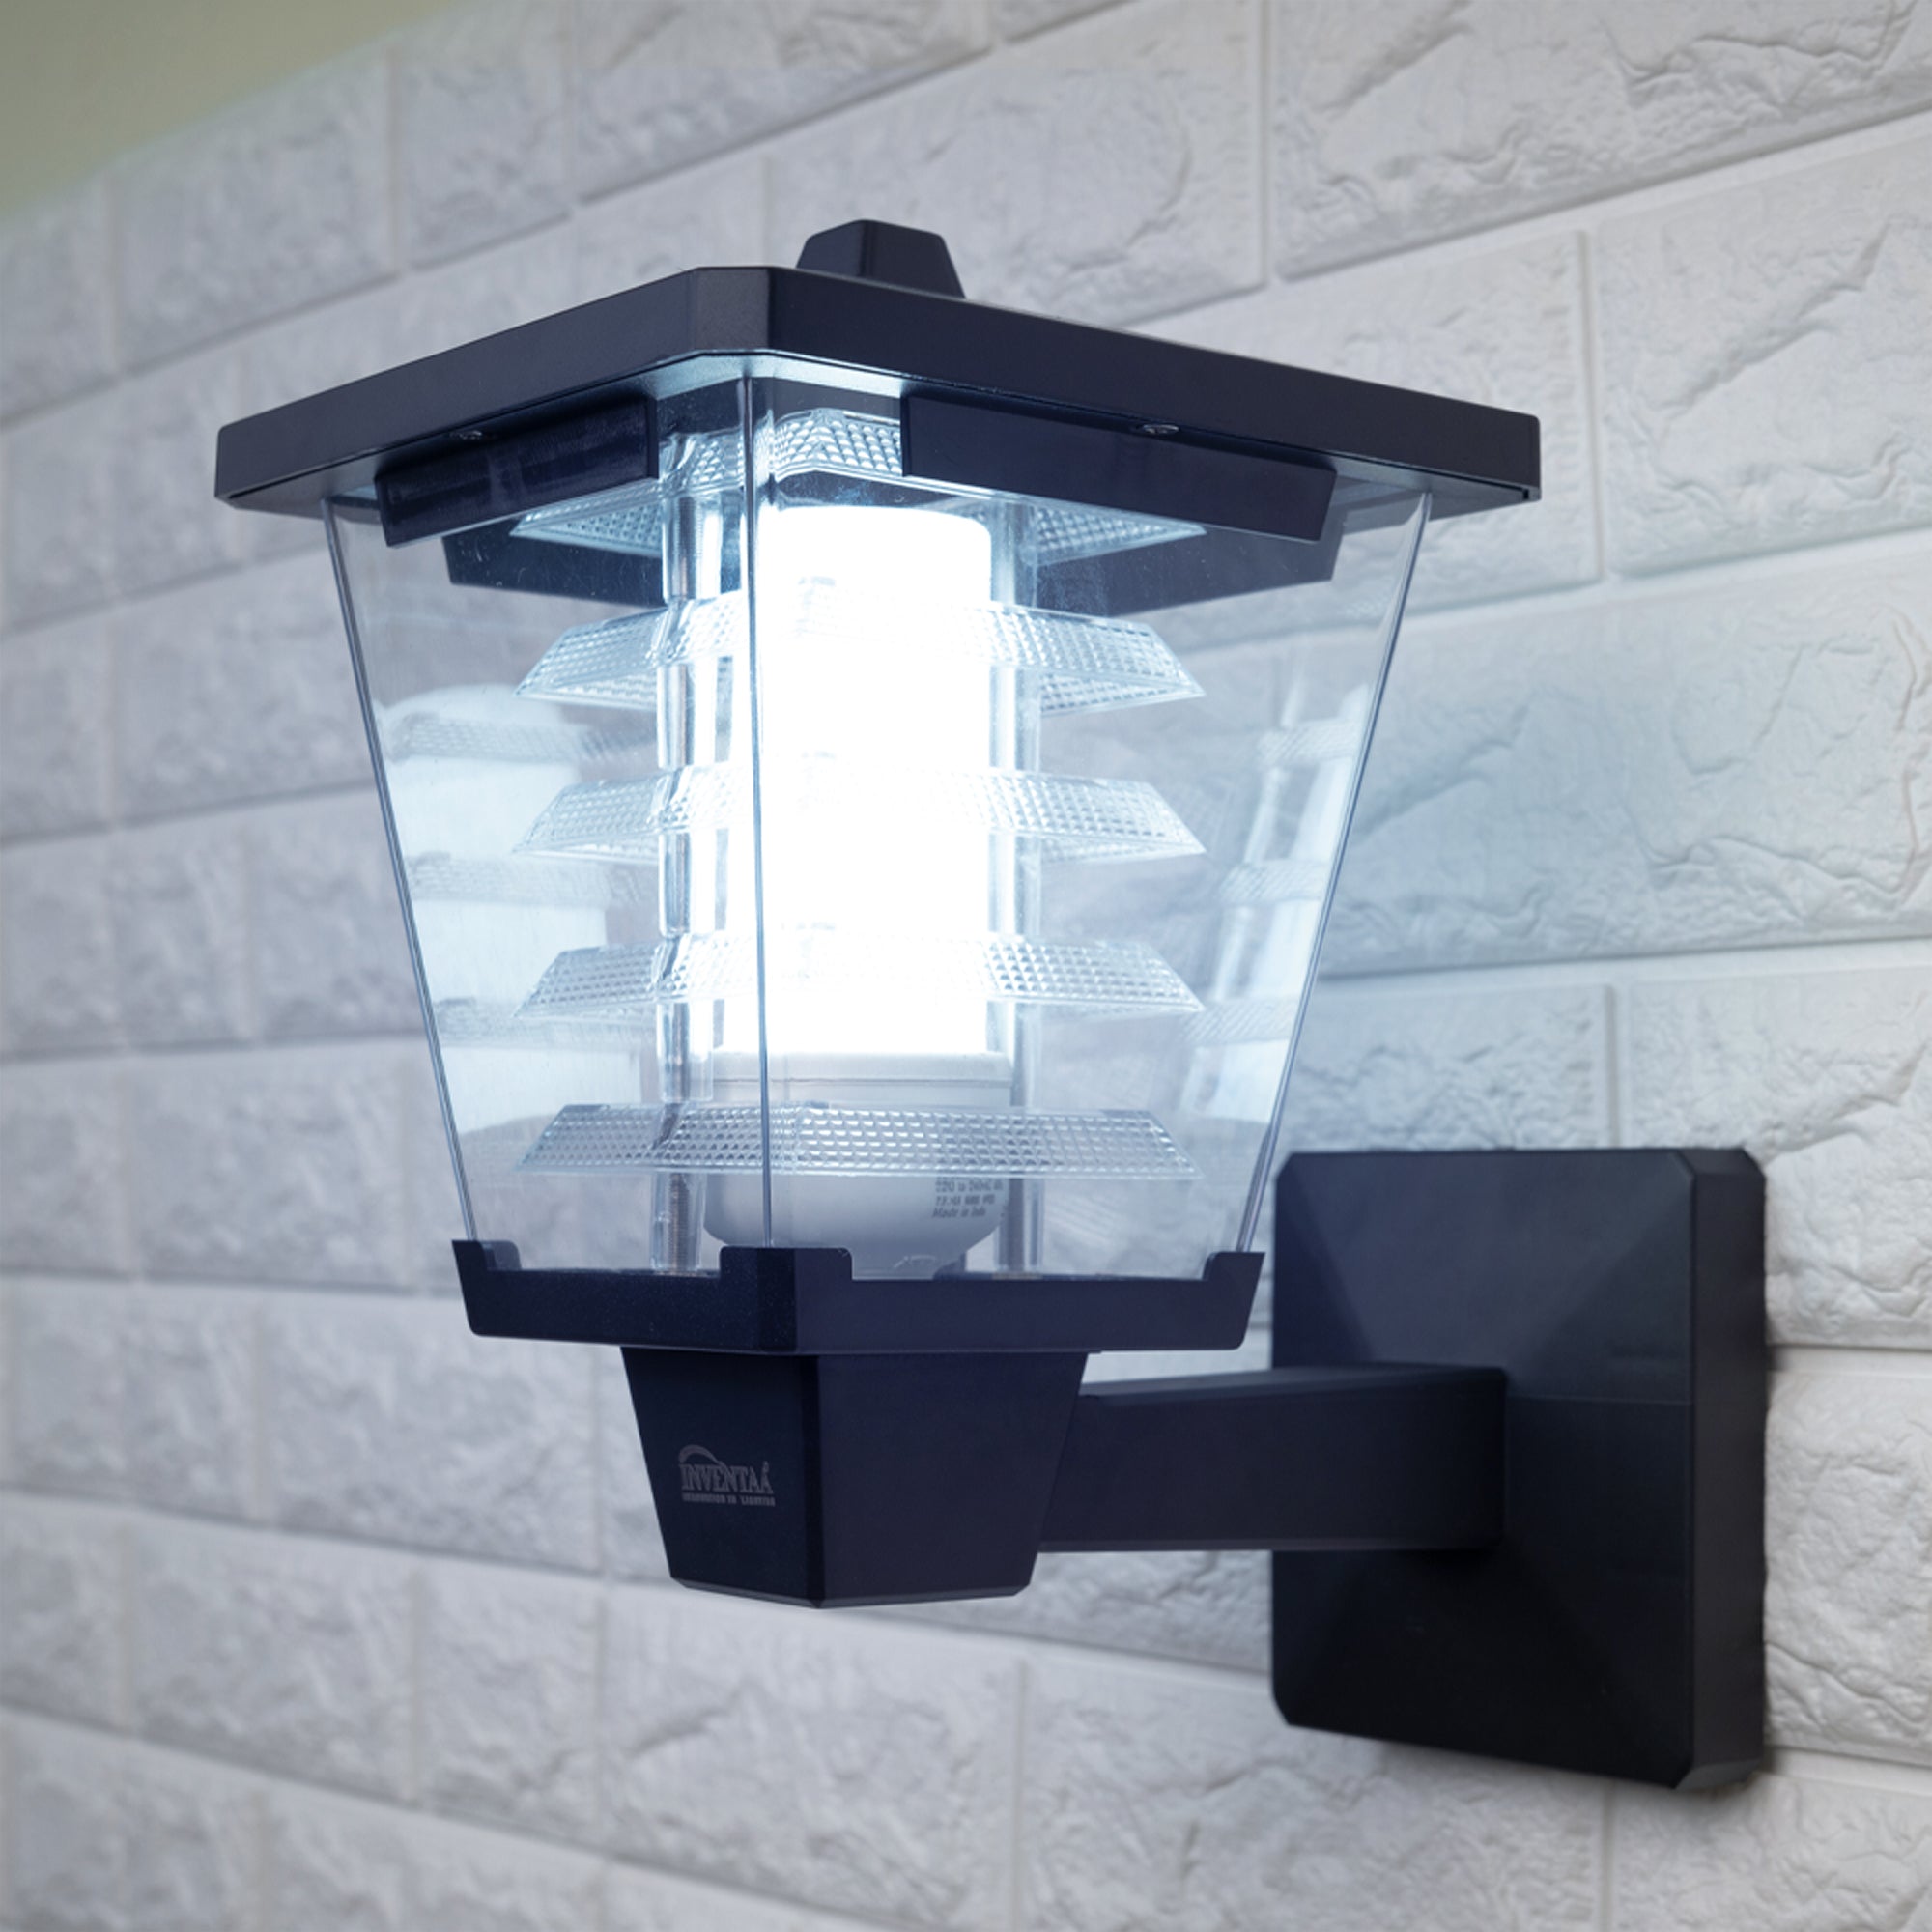 Wall glasis led wall light emitting a cool white glow #bulb options_cool